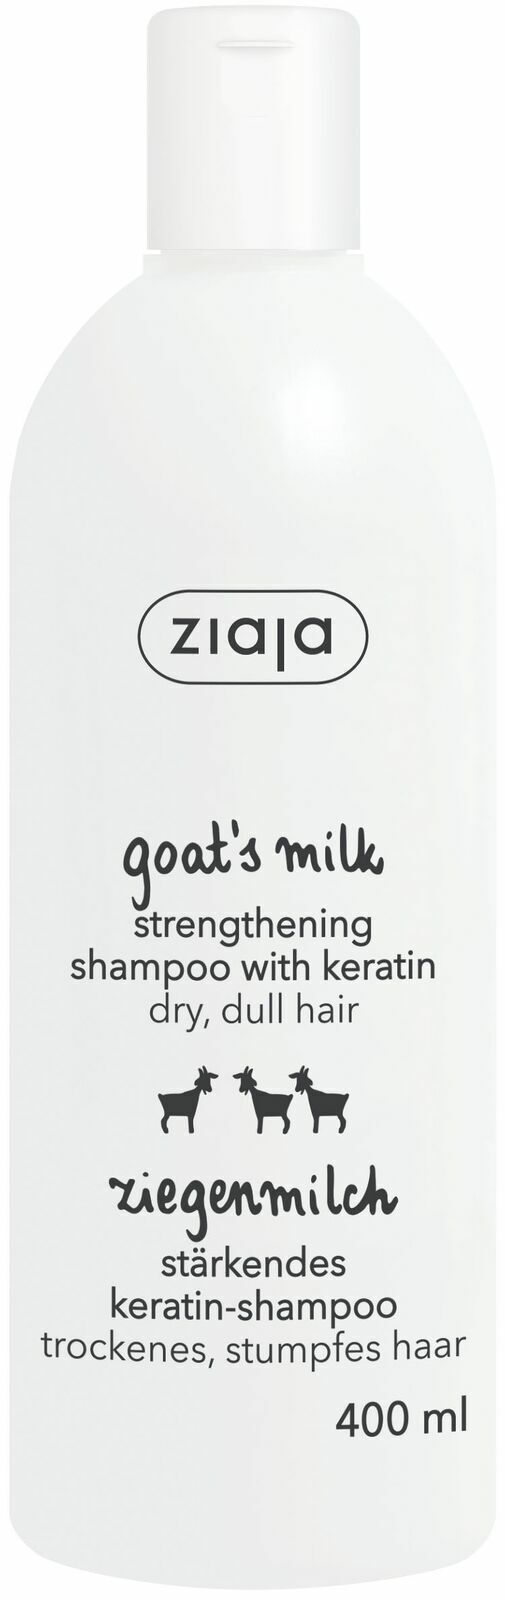 Ziaja Goat's Milk Strengthening Shampoo with Keratin for Dry & Dull Hair 400ml